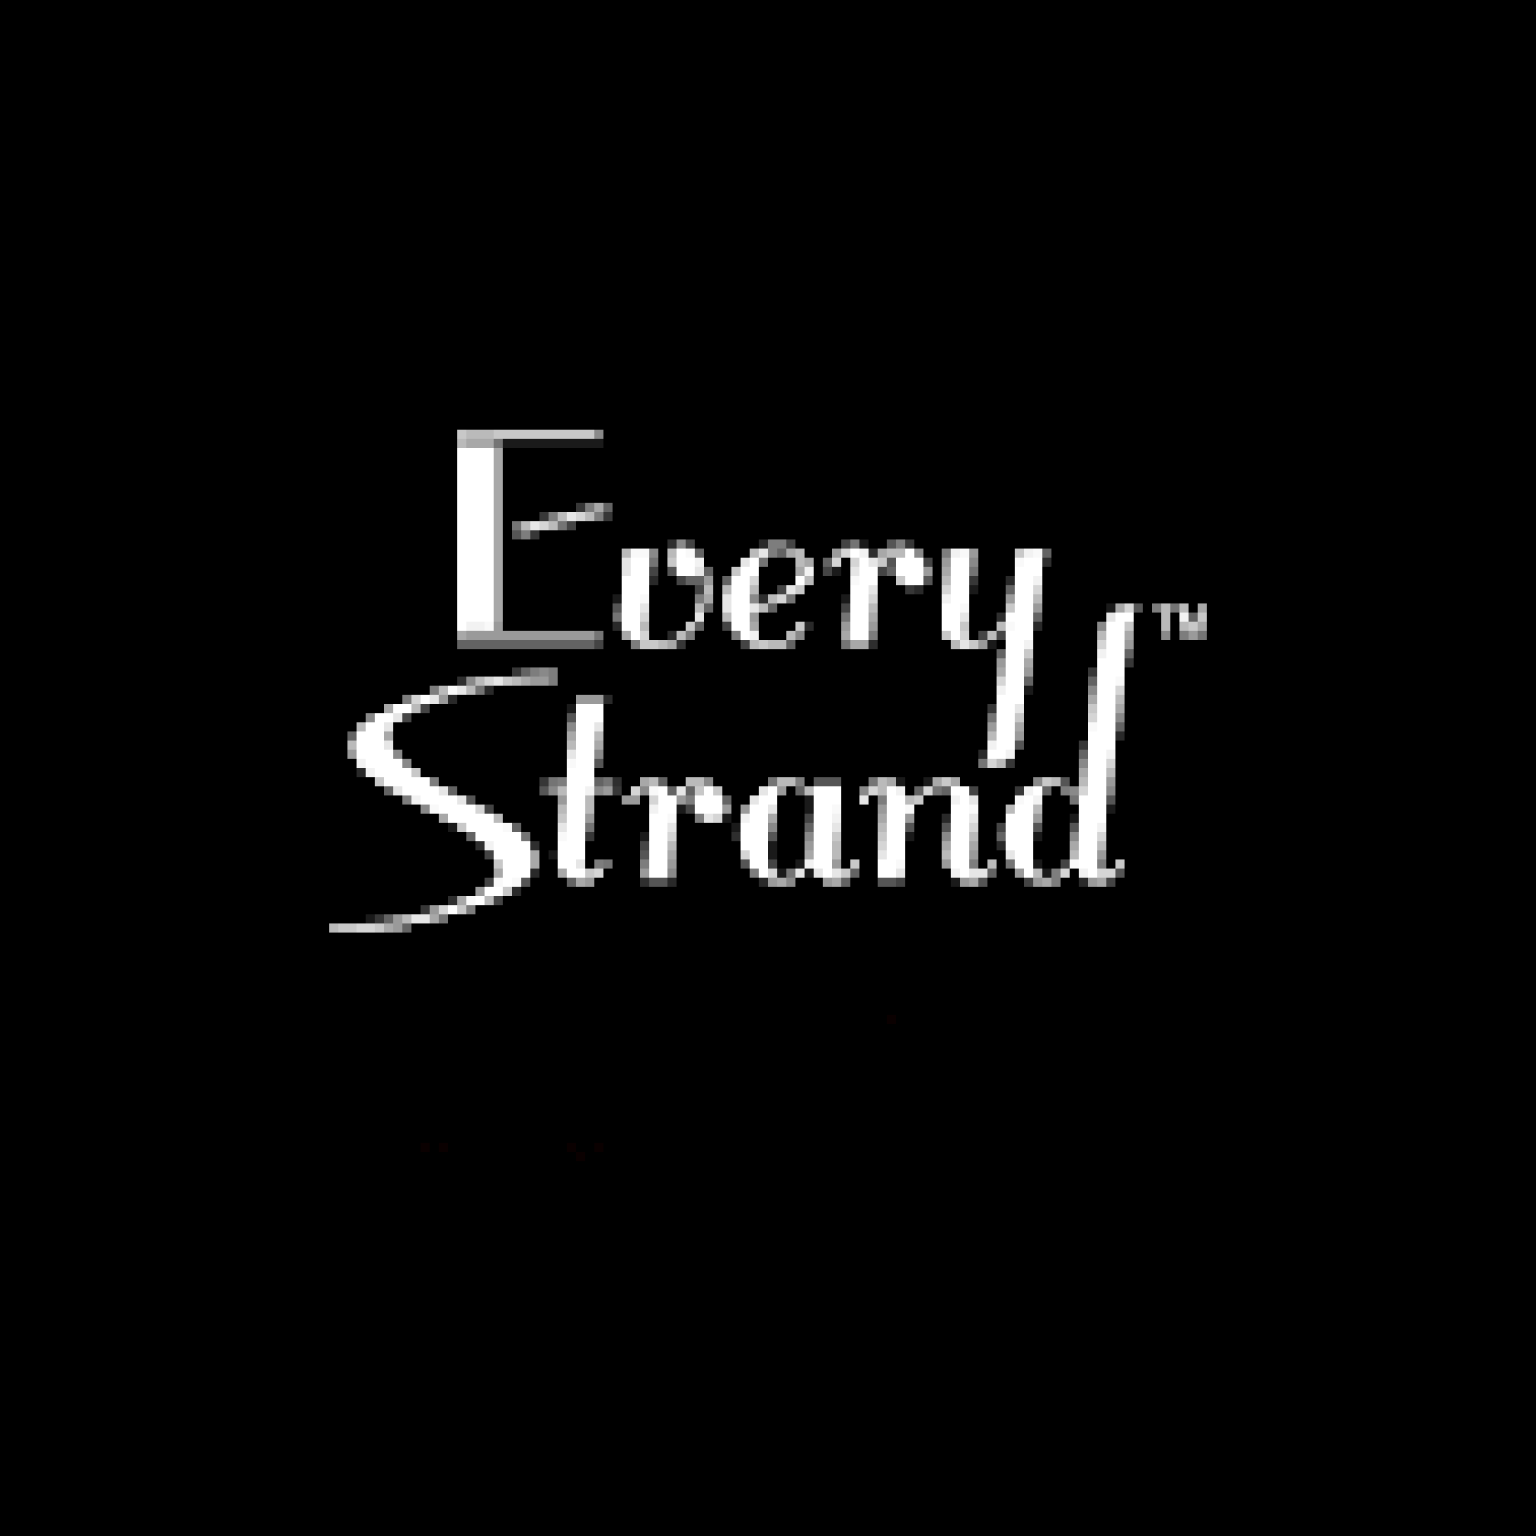 Every Strand